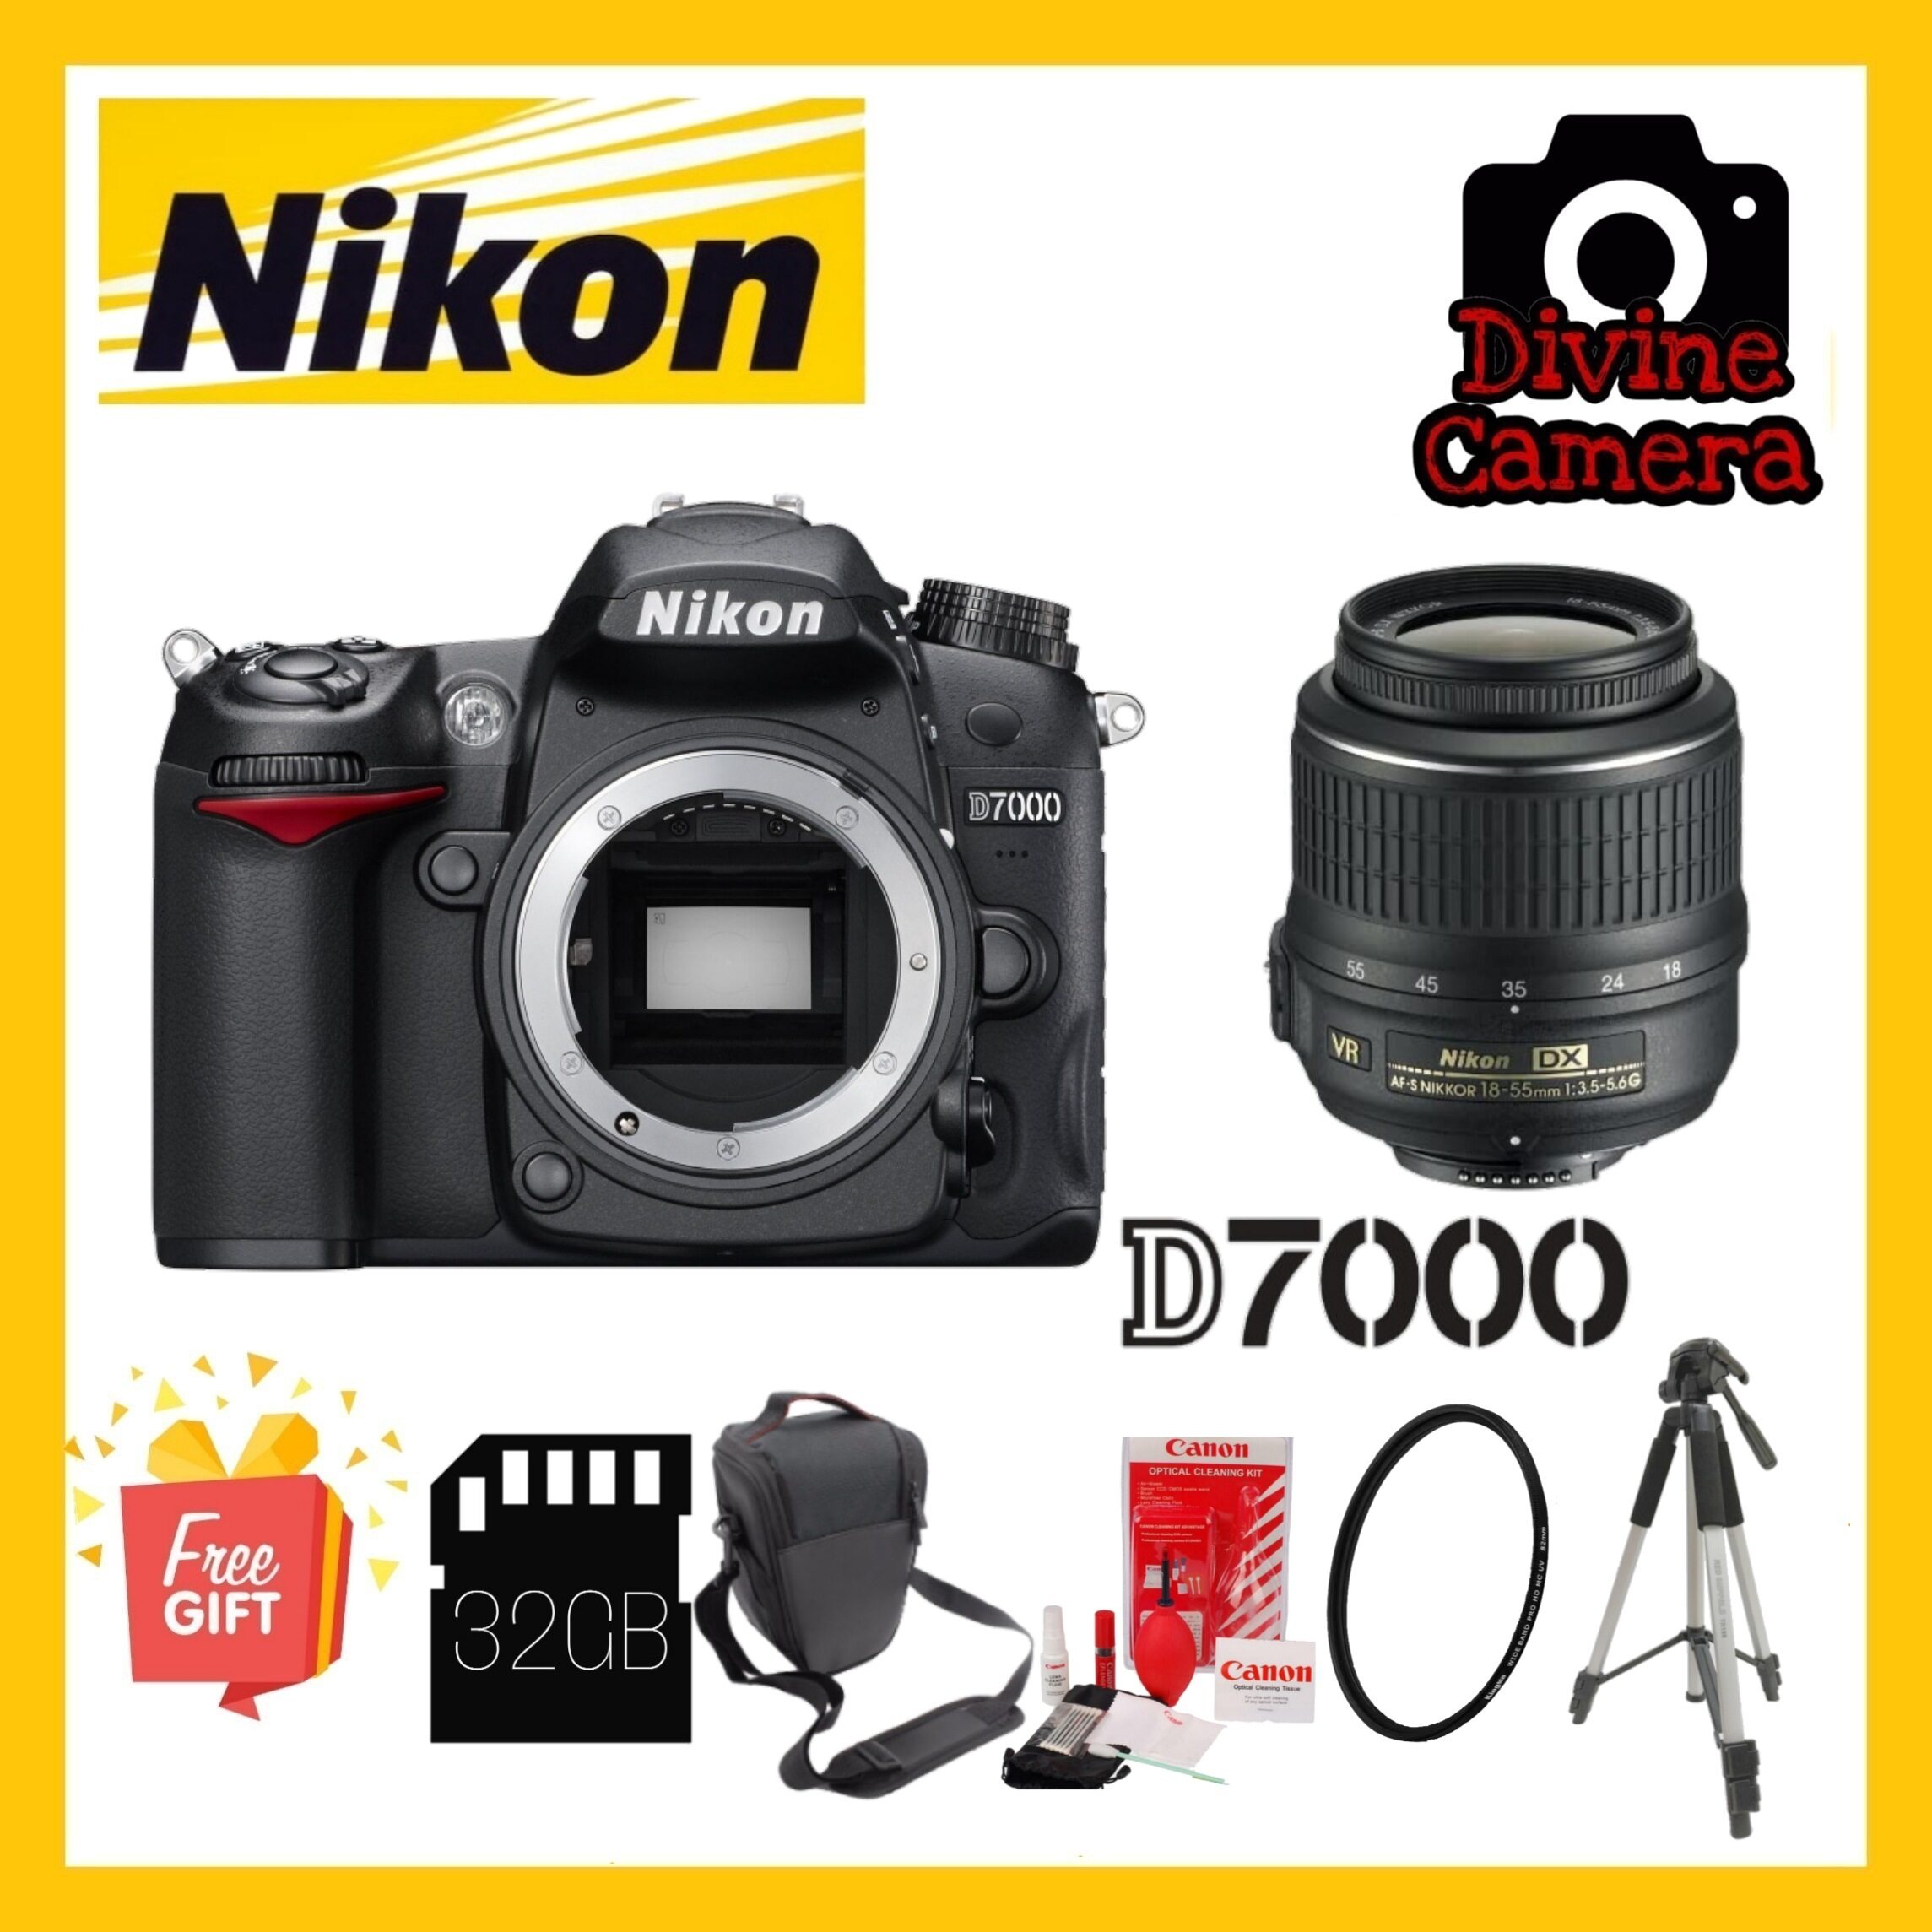 Nikon D7000 DSLR Camera with 18-55mm Lens | Lazada